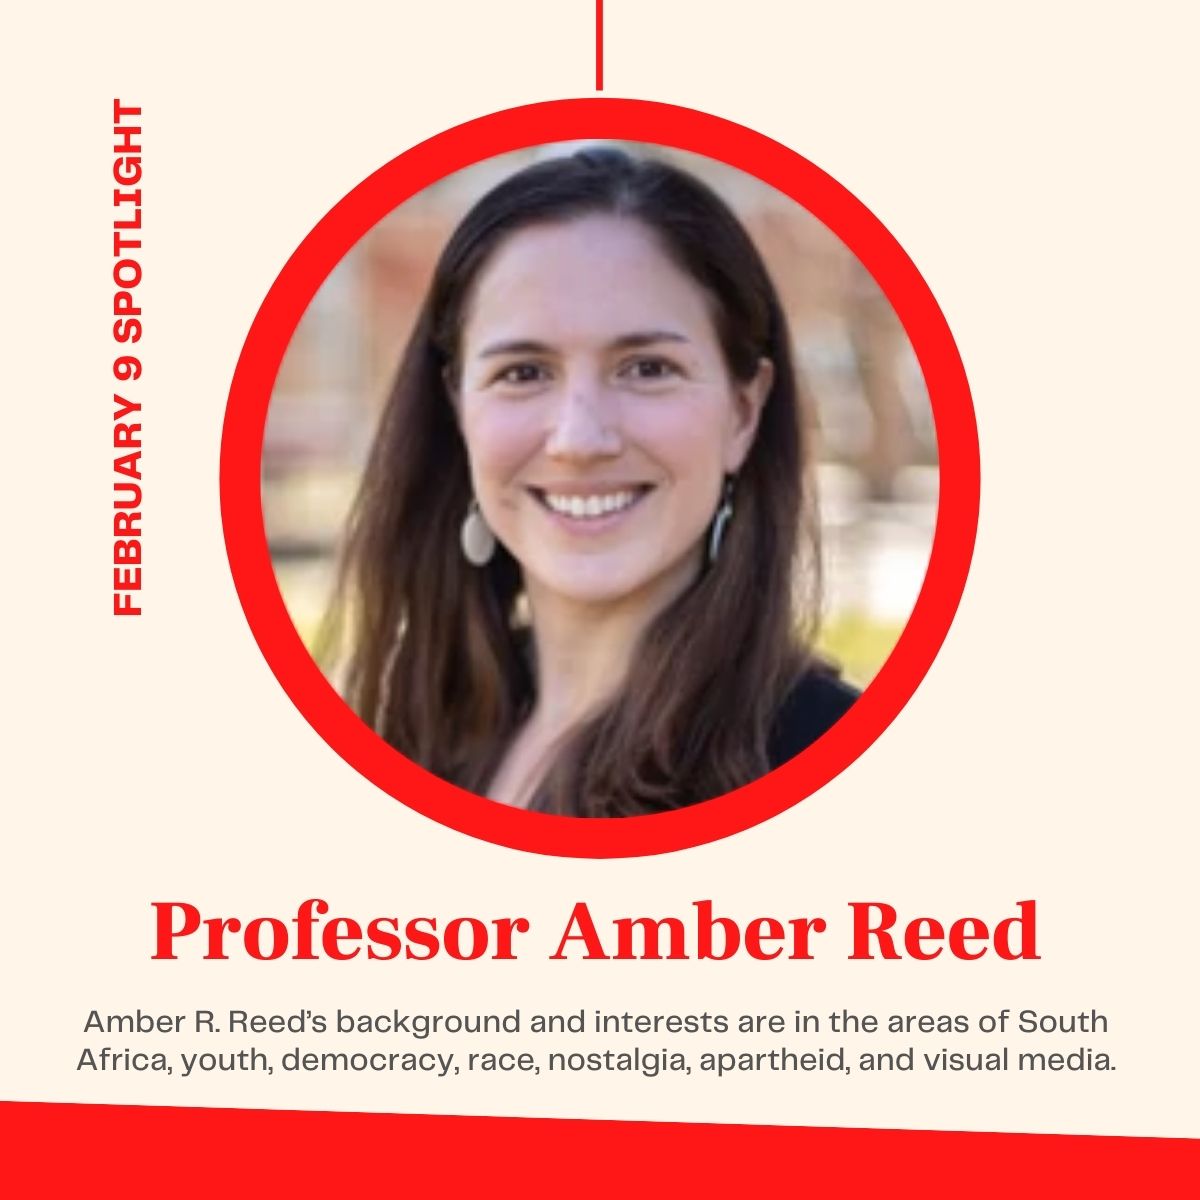 Amber reed model